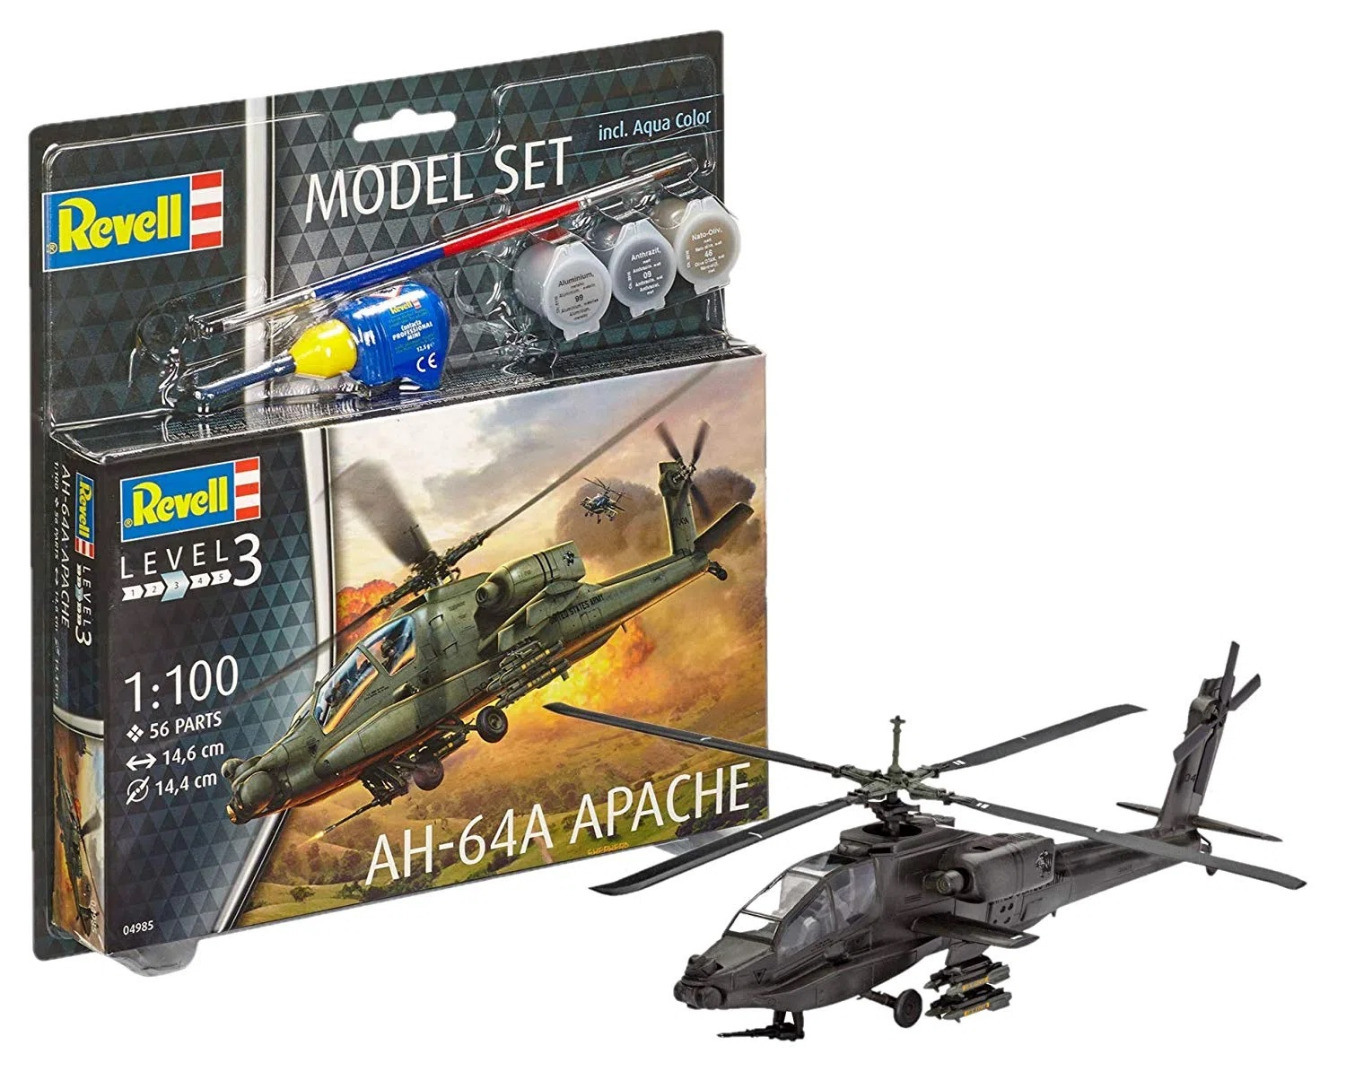 Revell Model Set AH-64A Apache Scale 1:100